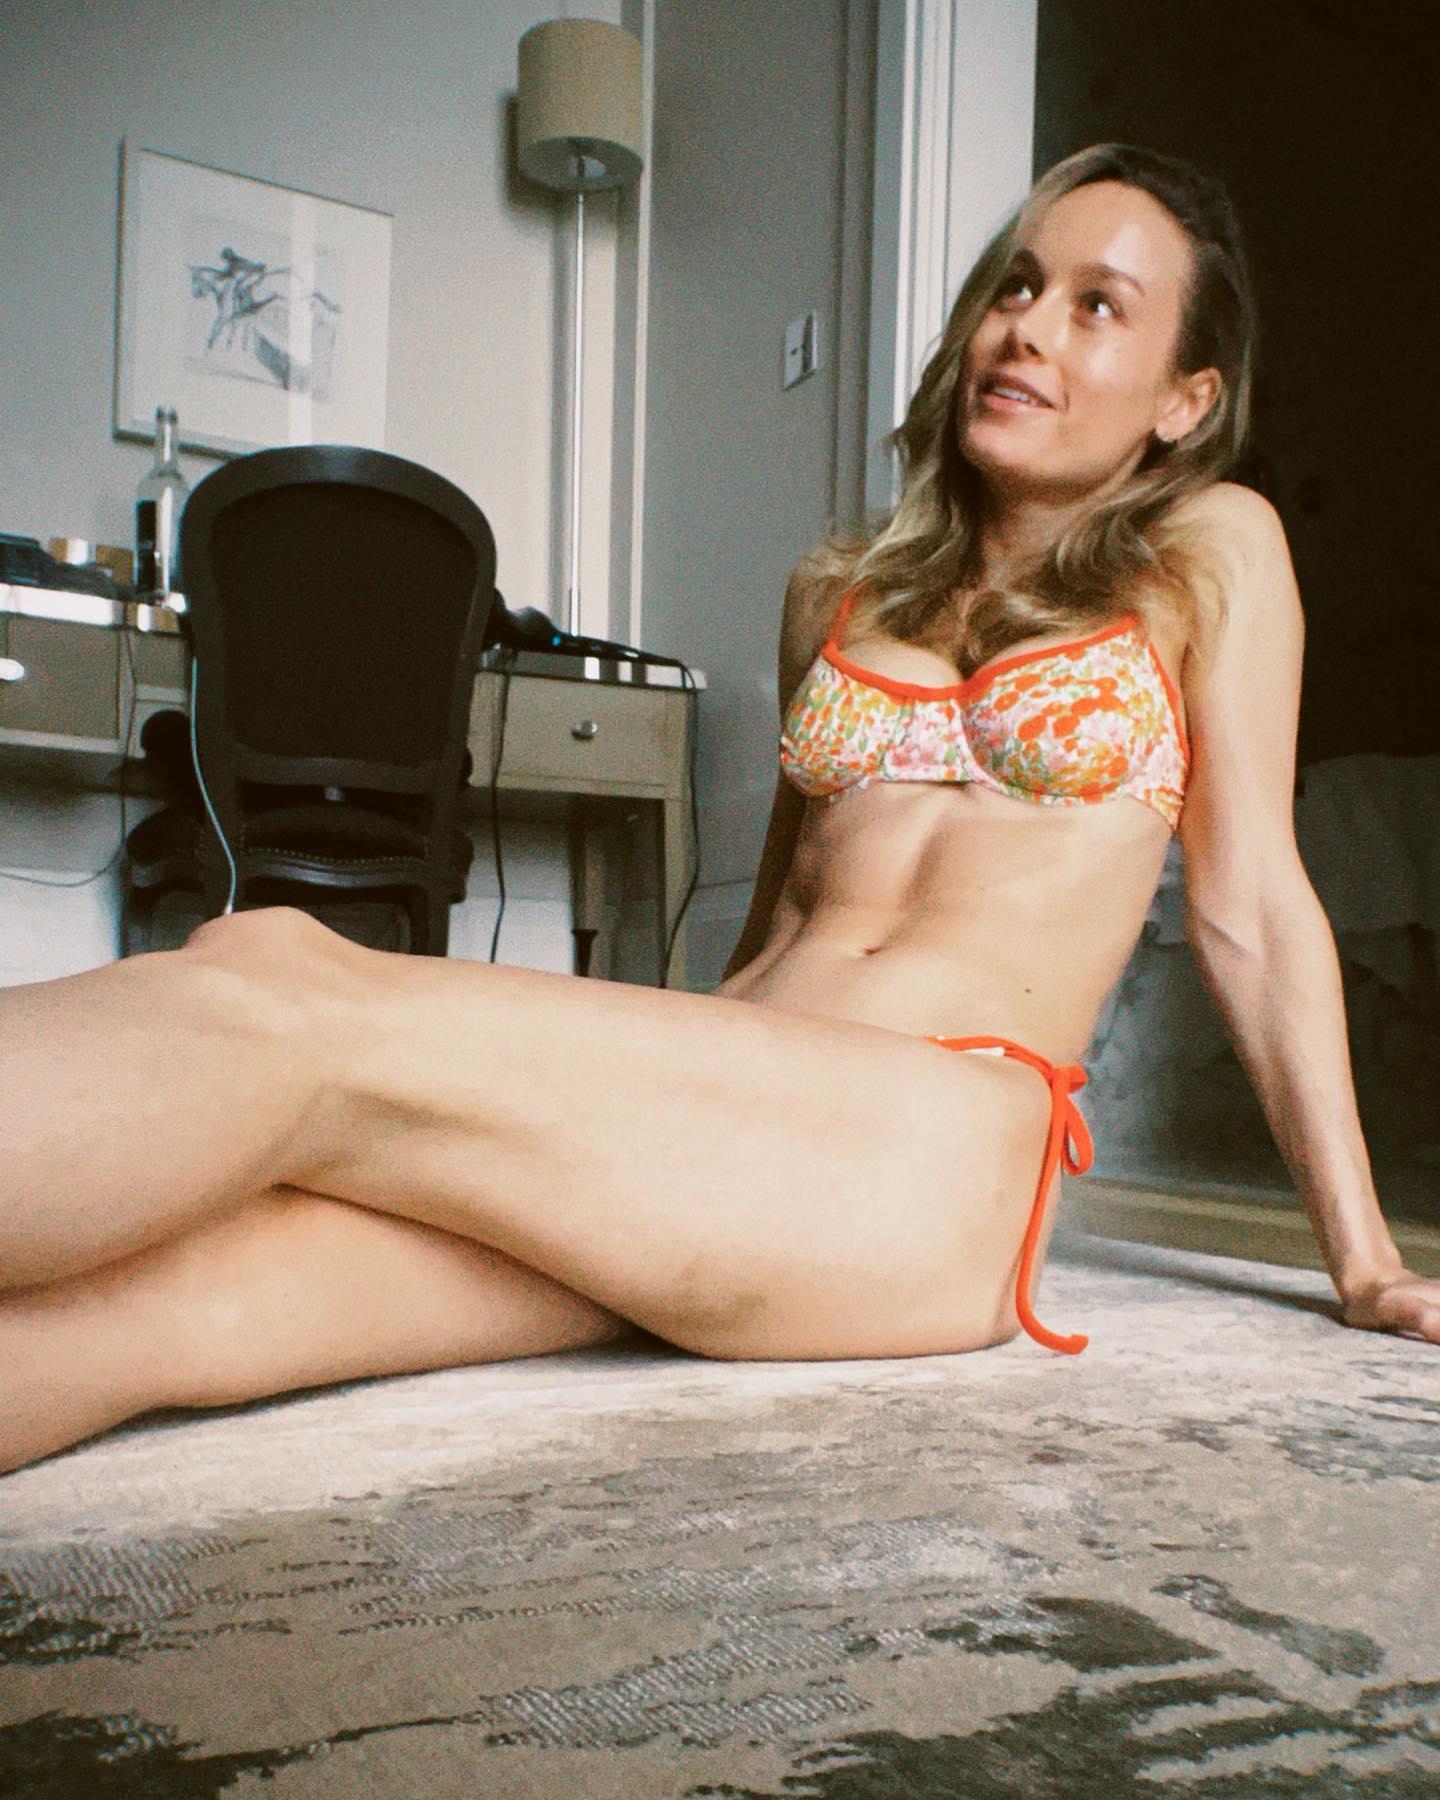 Brie Larson sitting on the floor in her bikini.